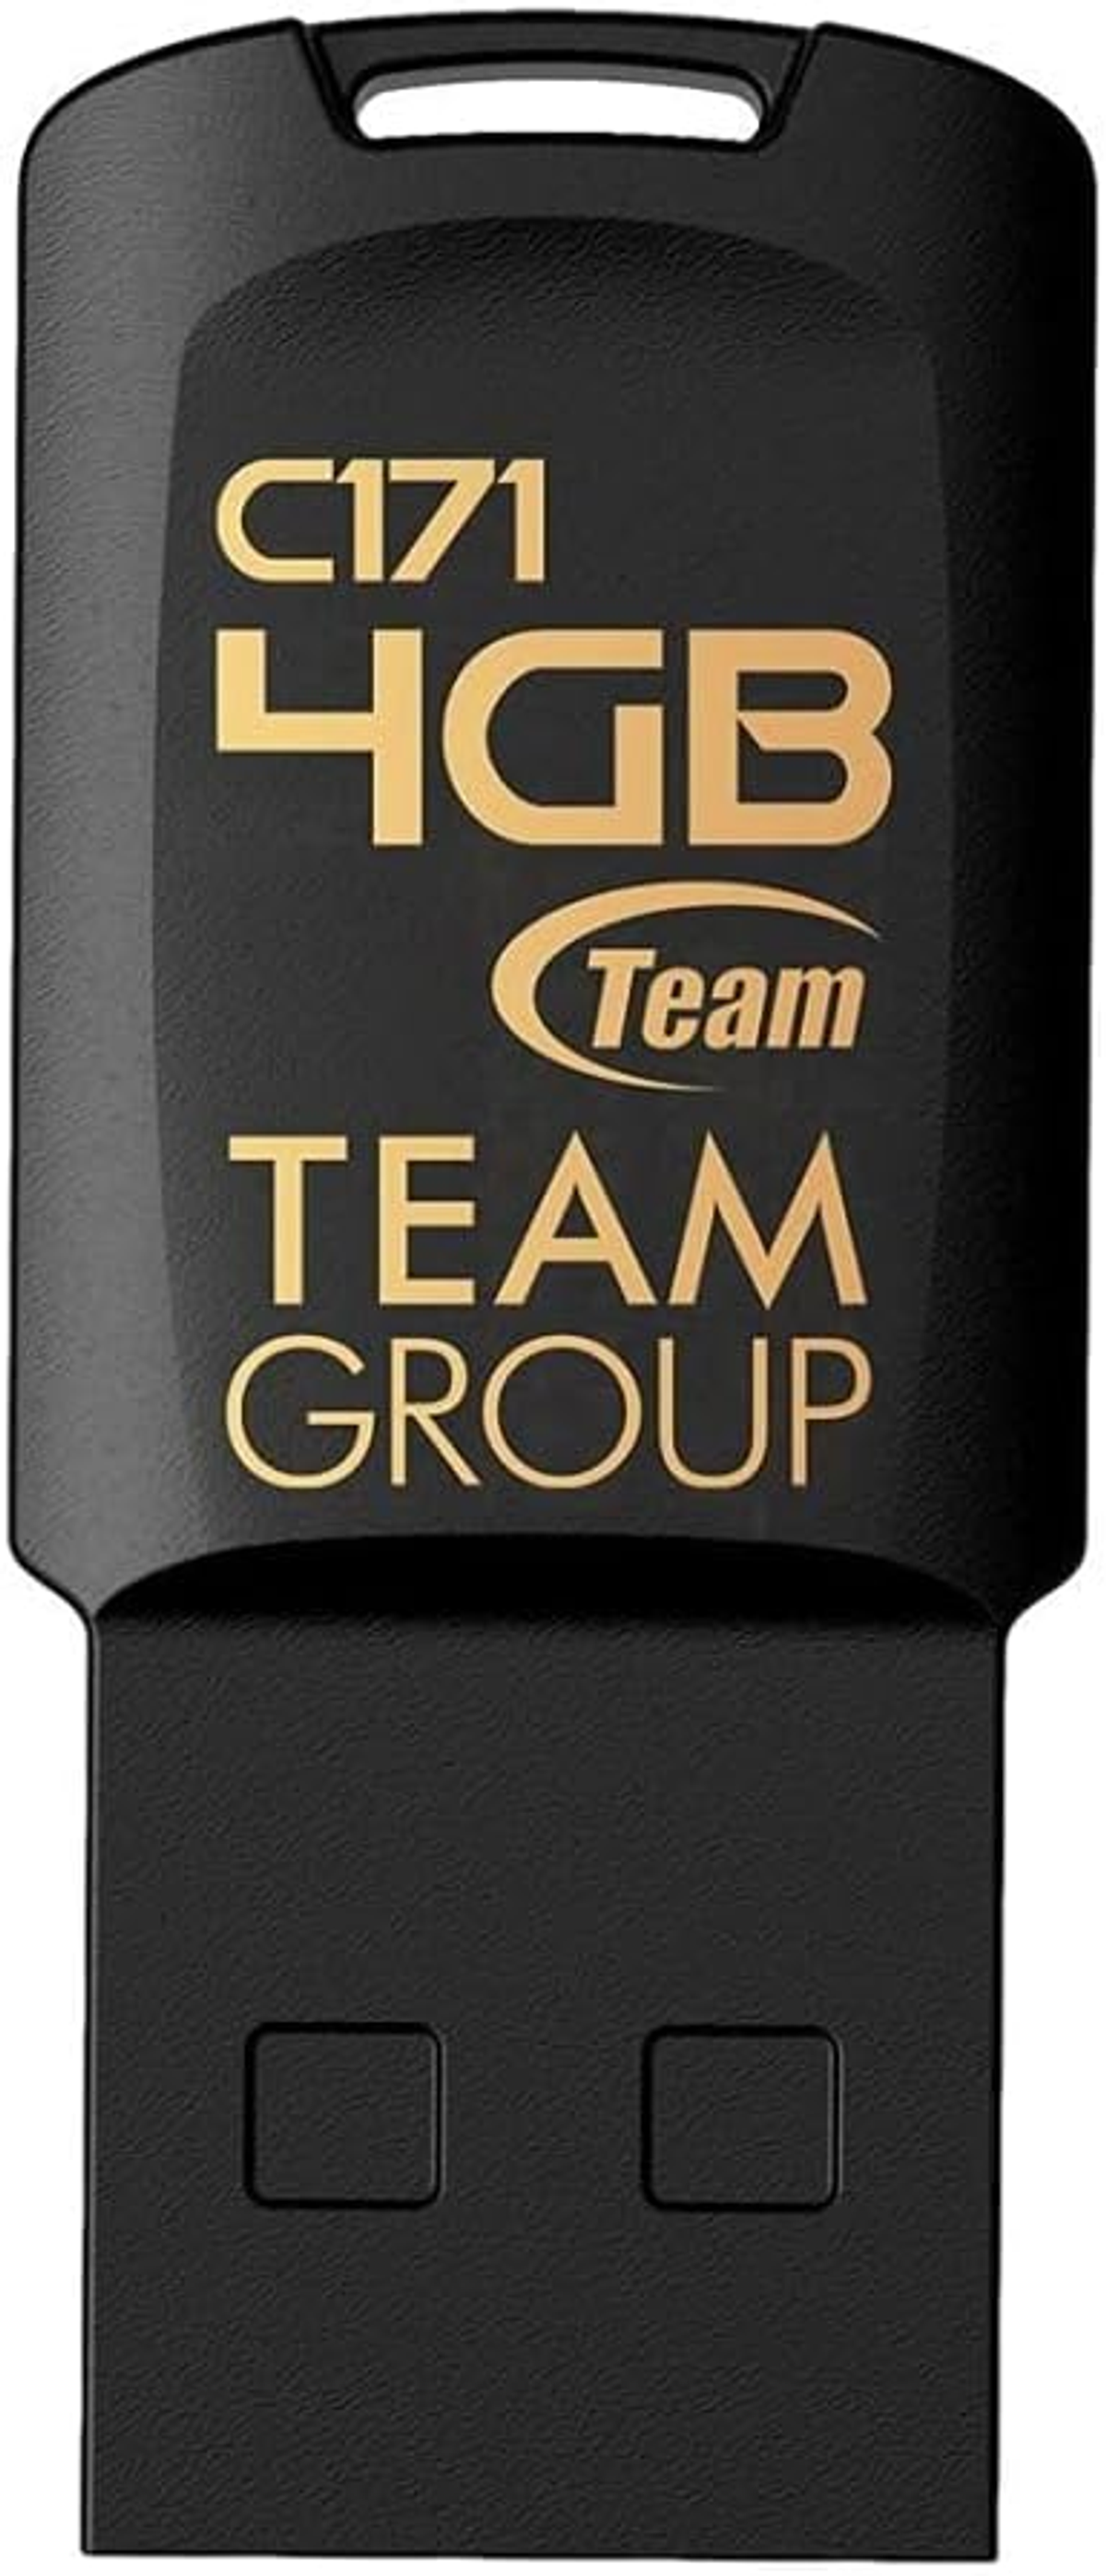 TEAM (Schwarz, GB) GROUP TC1714GB01 4 USB-Massenspeicher